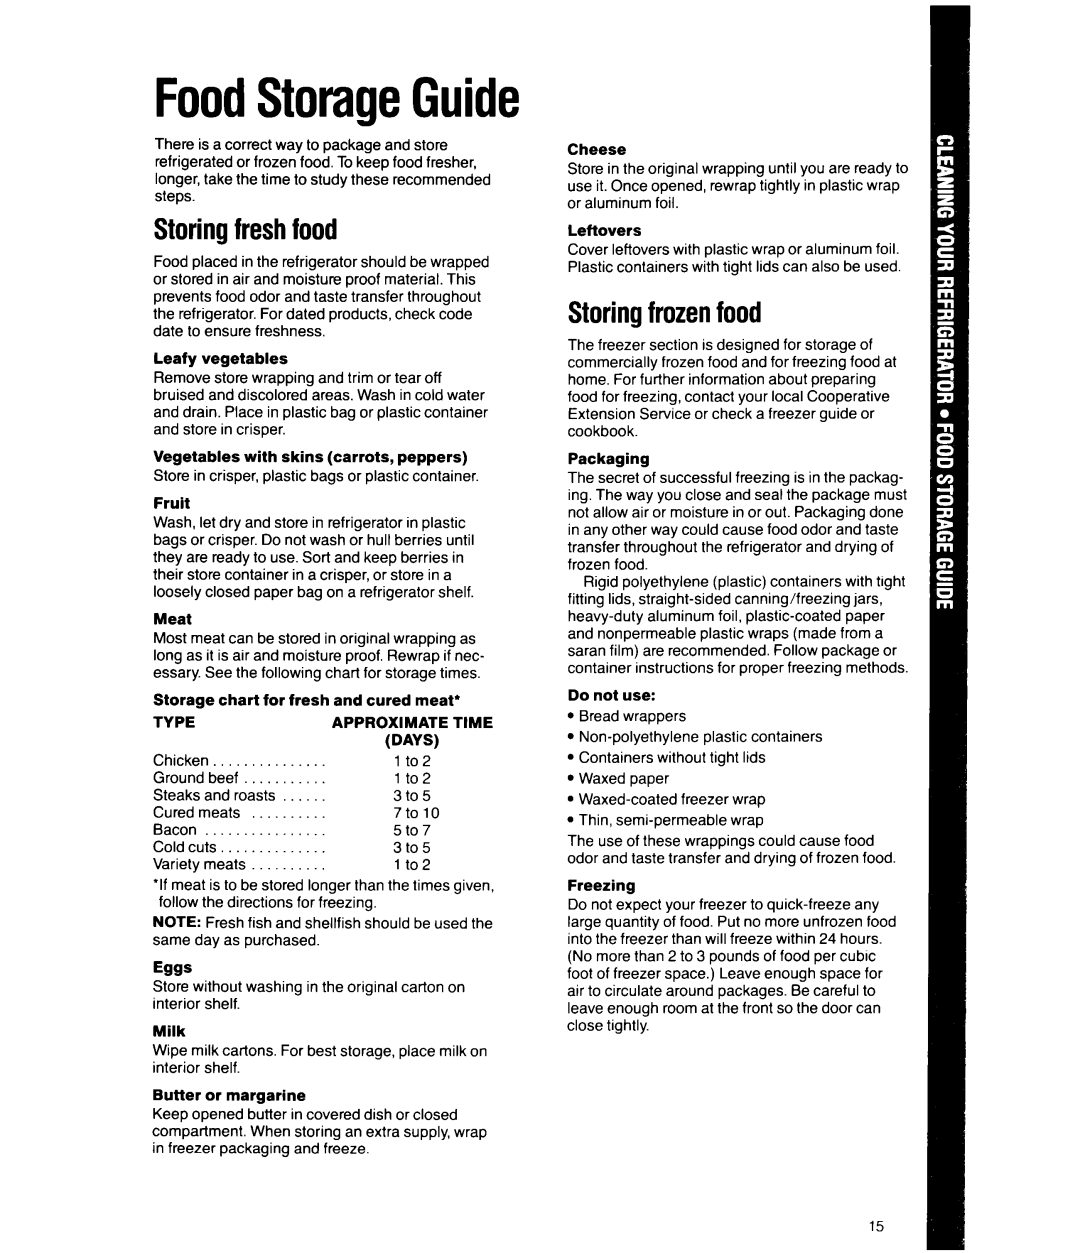 Whirlpool ED25PW manual Storingfreshfood, sZorina- ----frozen--J--~~food, Eggs, FoodStorageGuide 